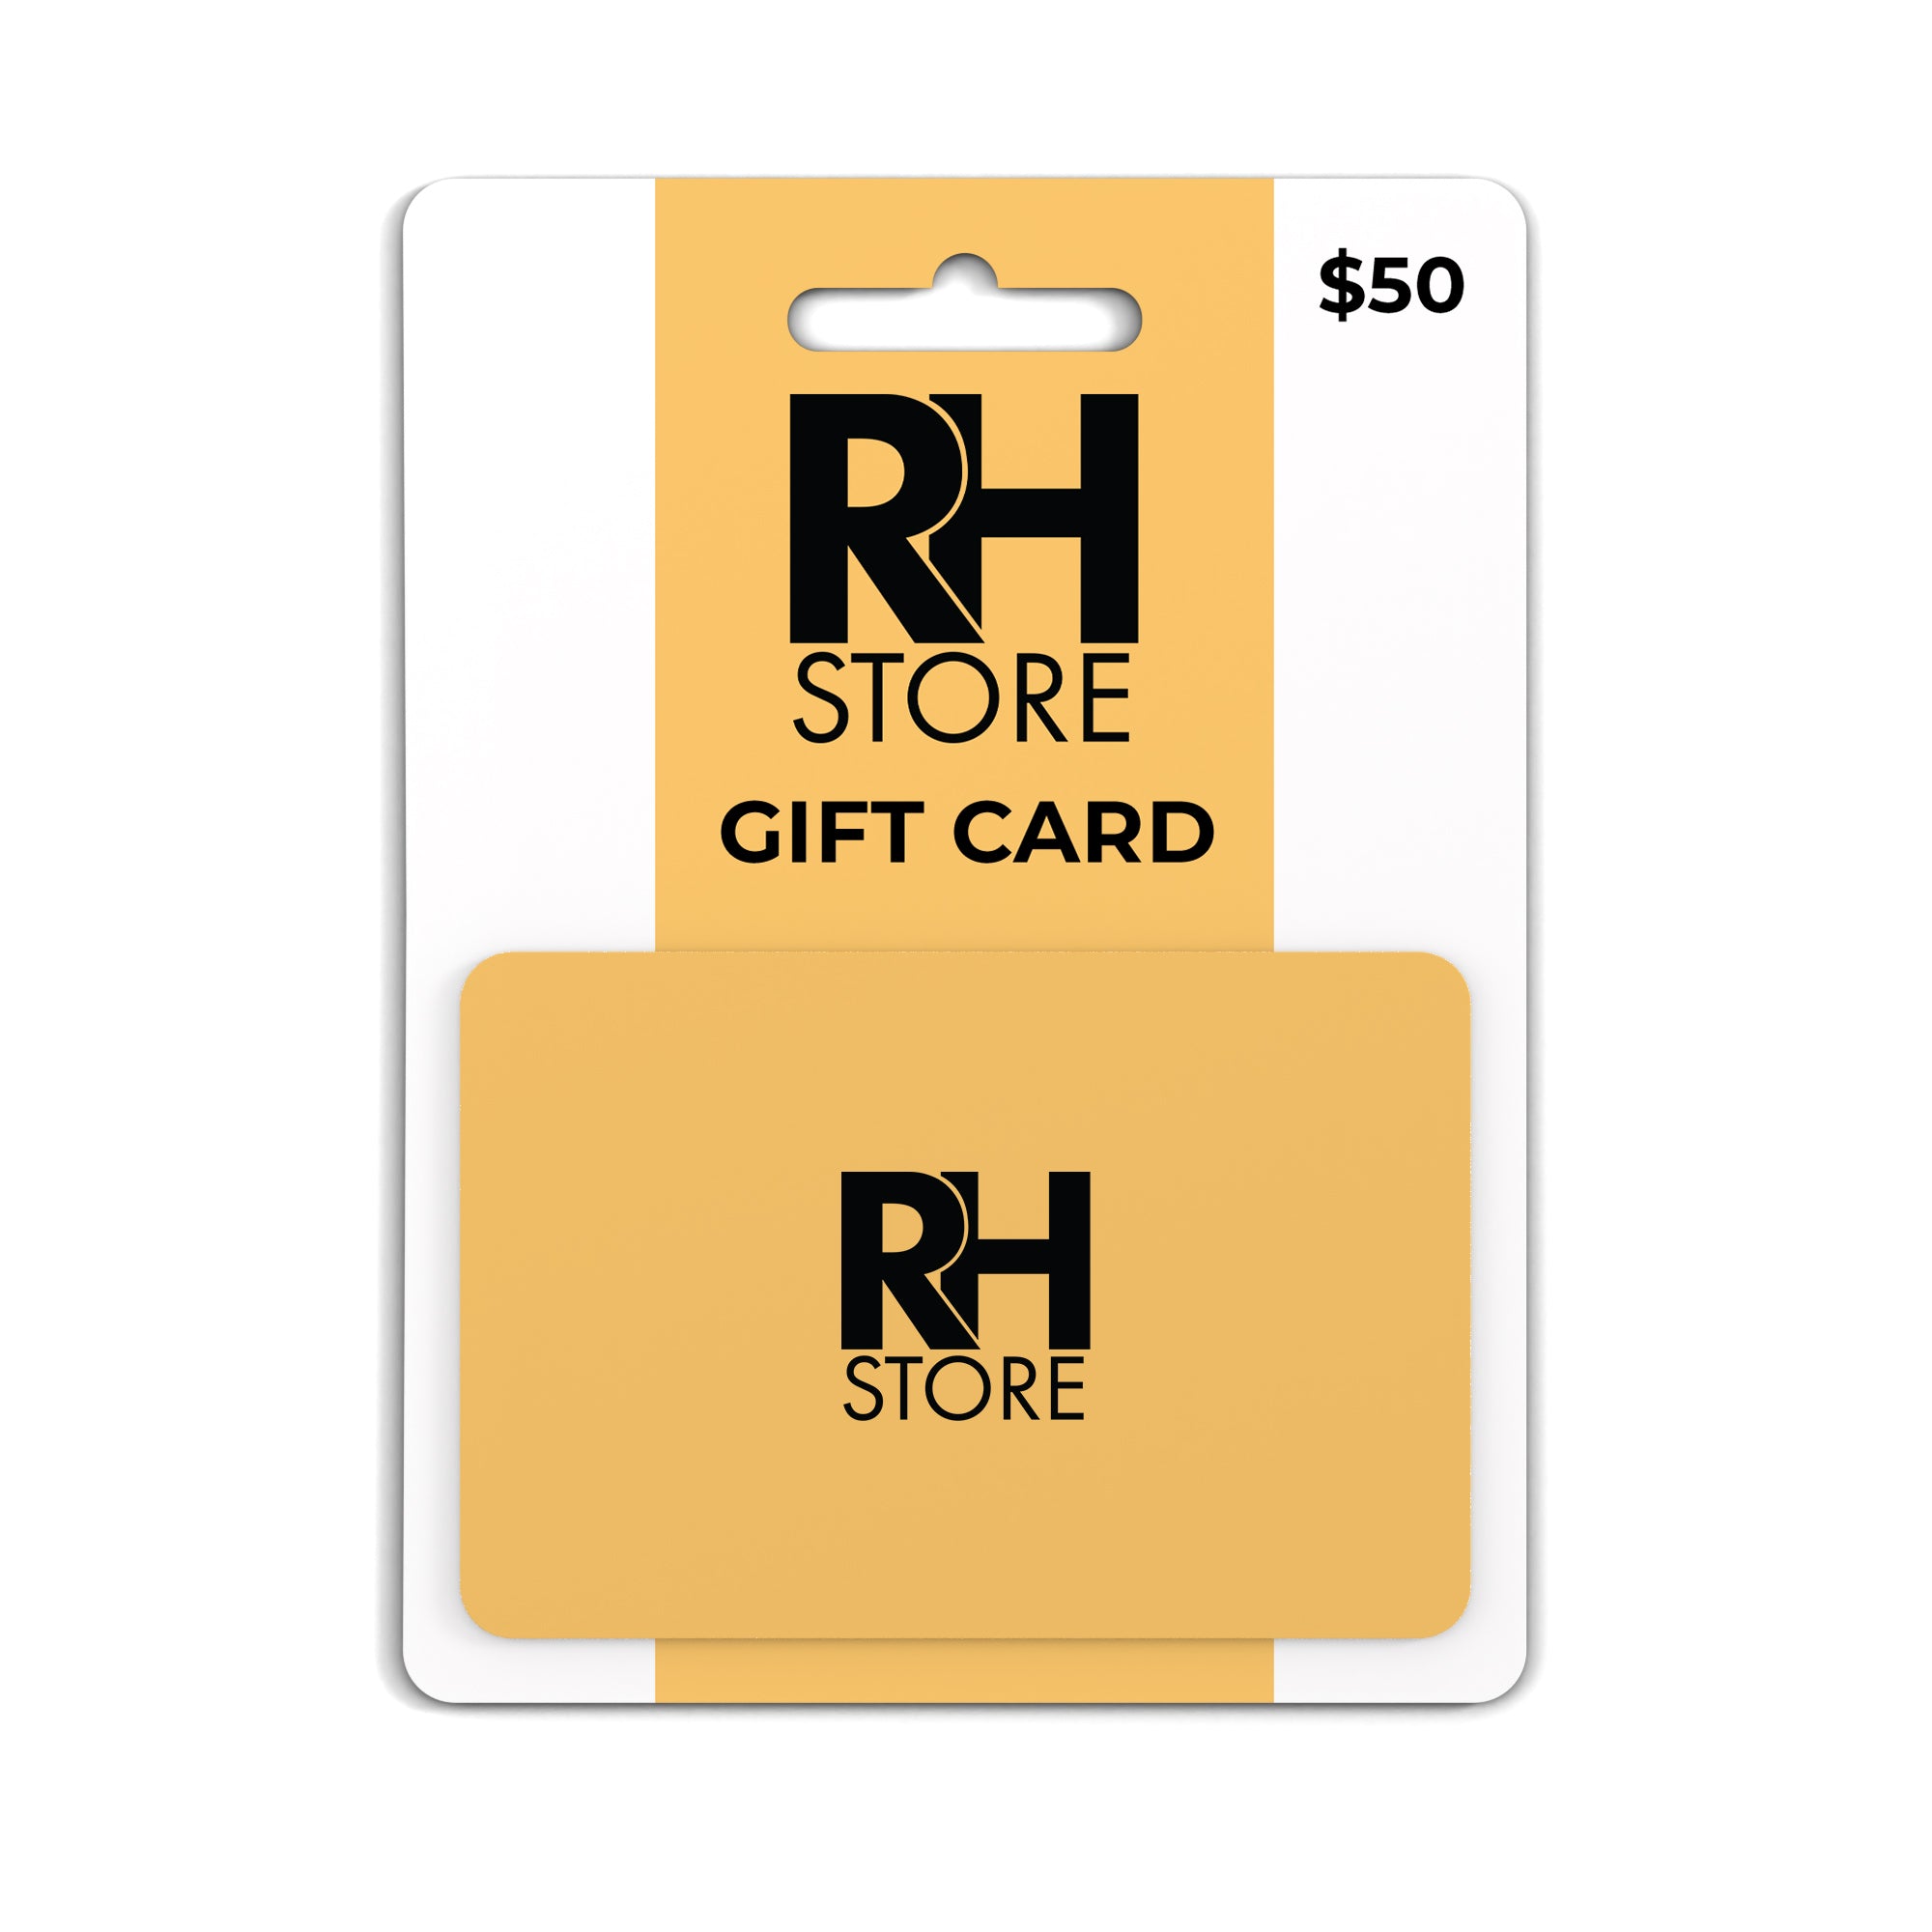 The Range Hood Store Gift Card